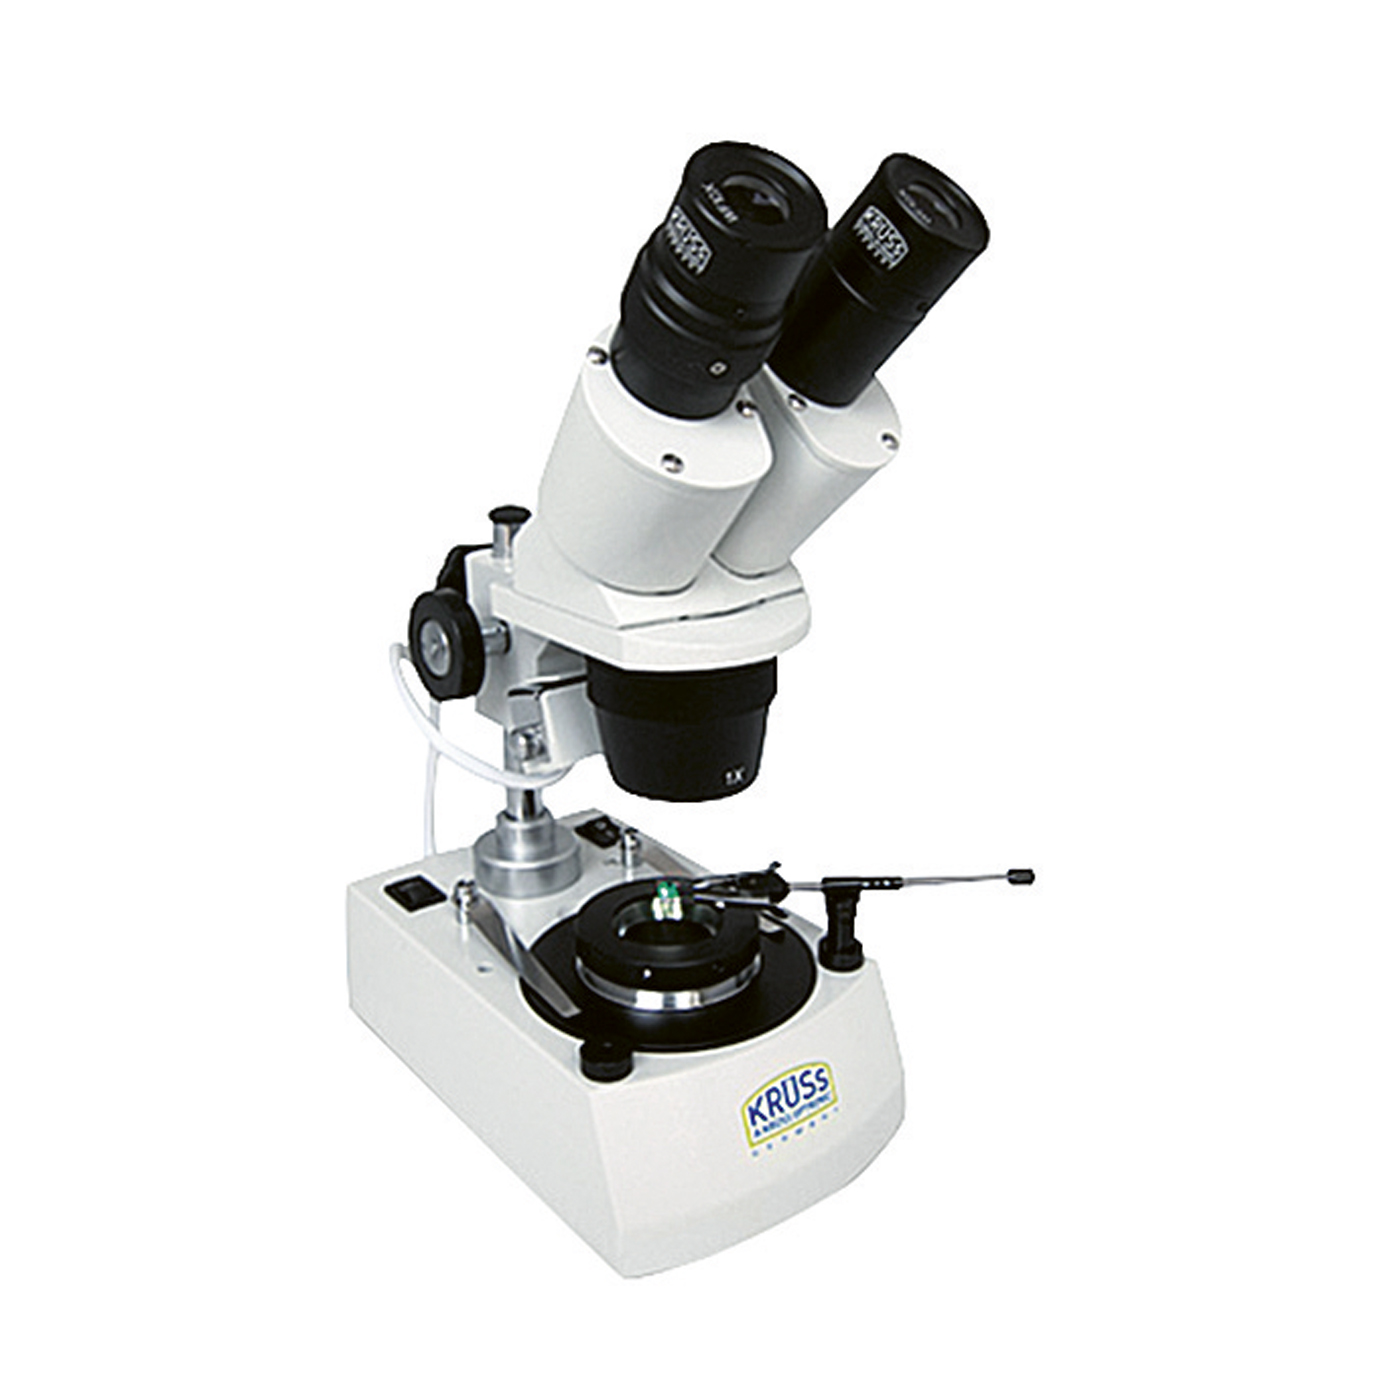 KSW4000 Stereo Microscope - 1 piece